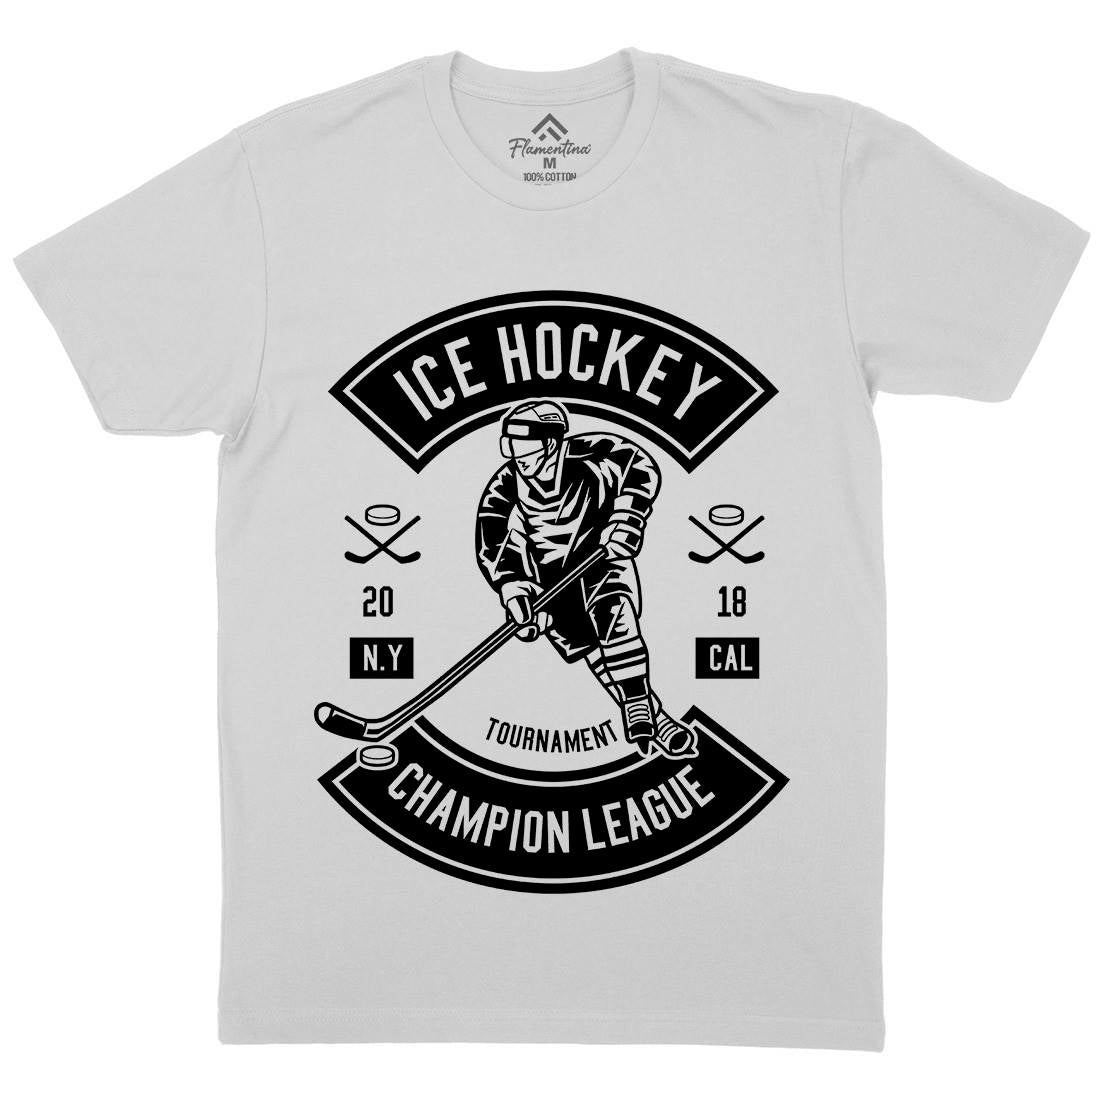 Ice Hockey Champion League Mens Crew Neck T-Shirt Sport B564